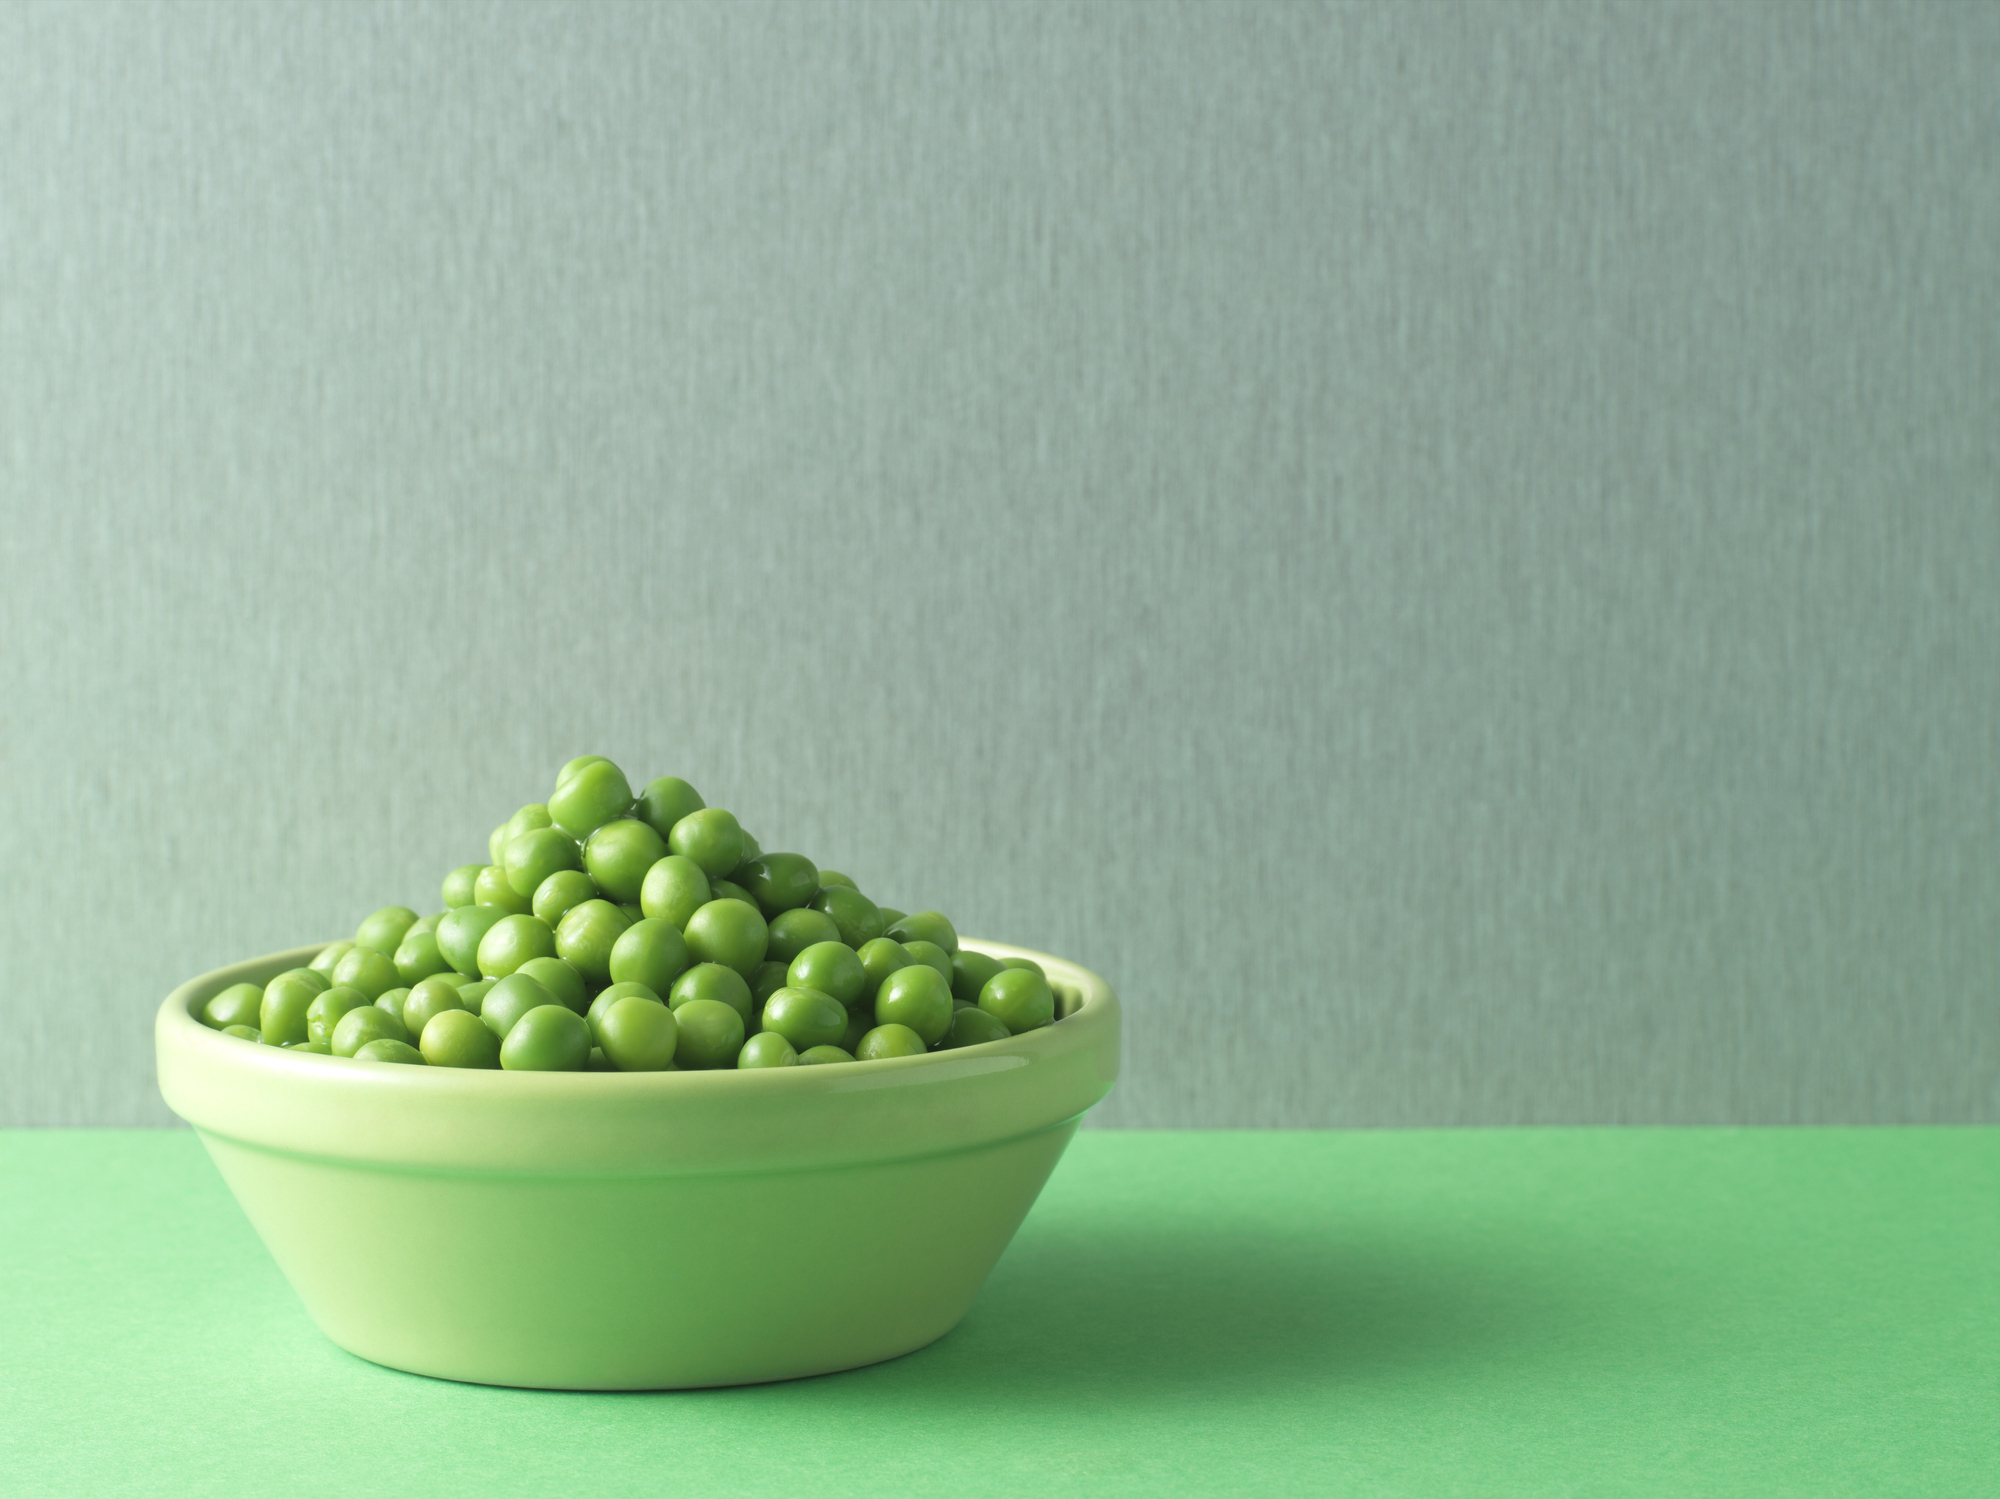 A bowl of peas